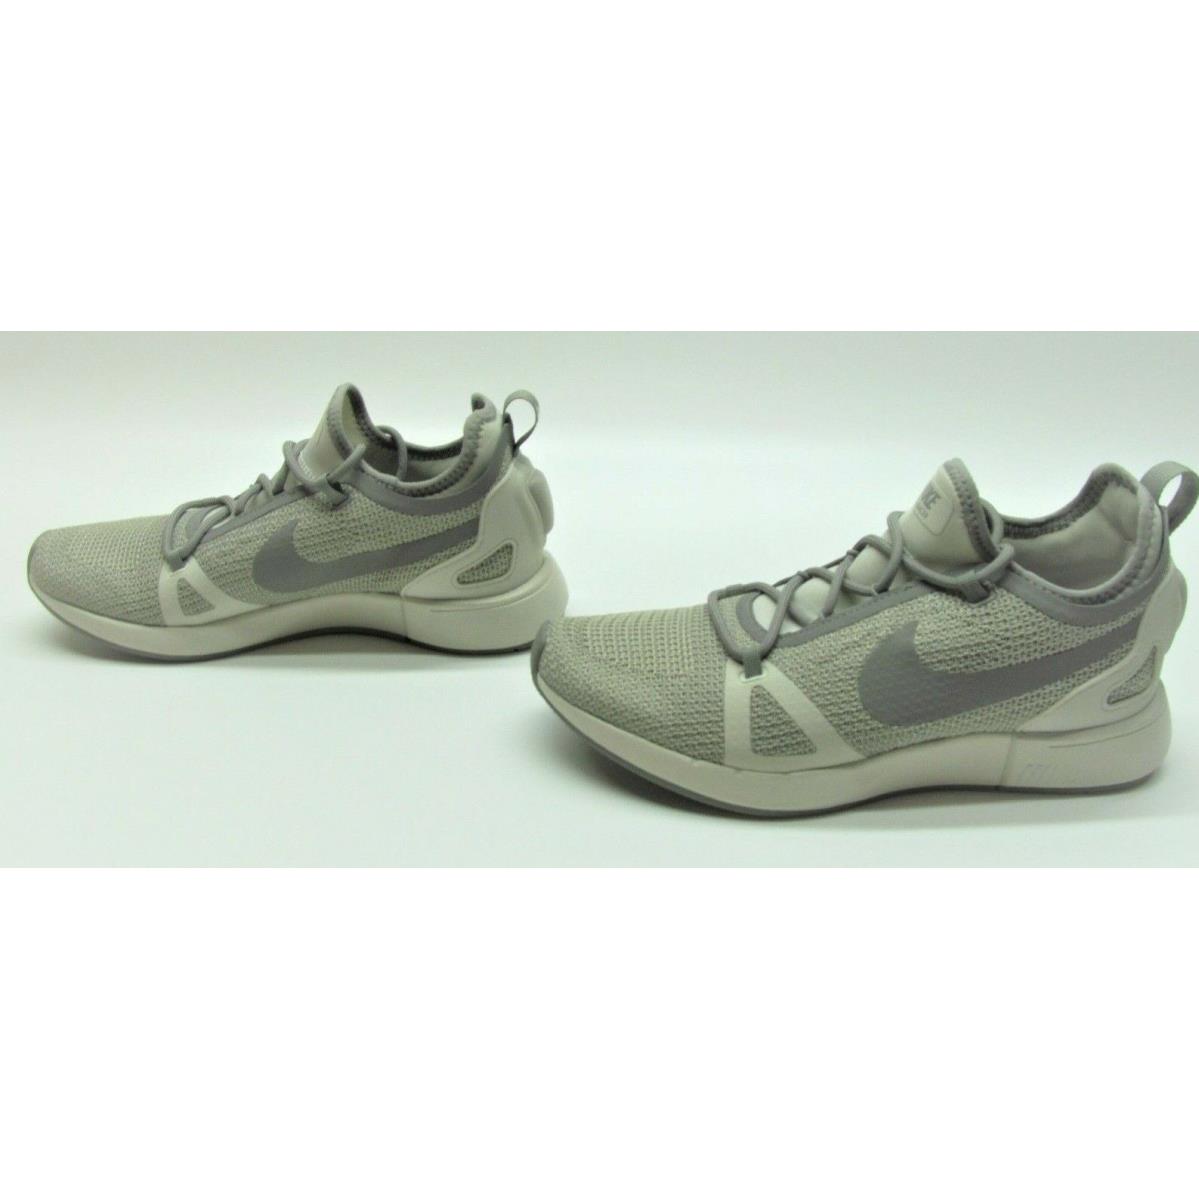 Nike Dual Racer 918228 004 Running Training Dust Gray Sneakers Shoes Mens   | 883212712257 - Nike shoes Dual Racer - Gray | SporTipTop